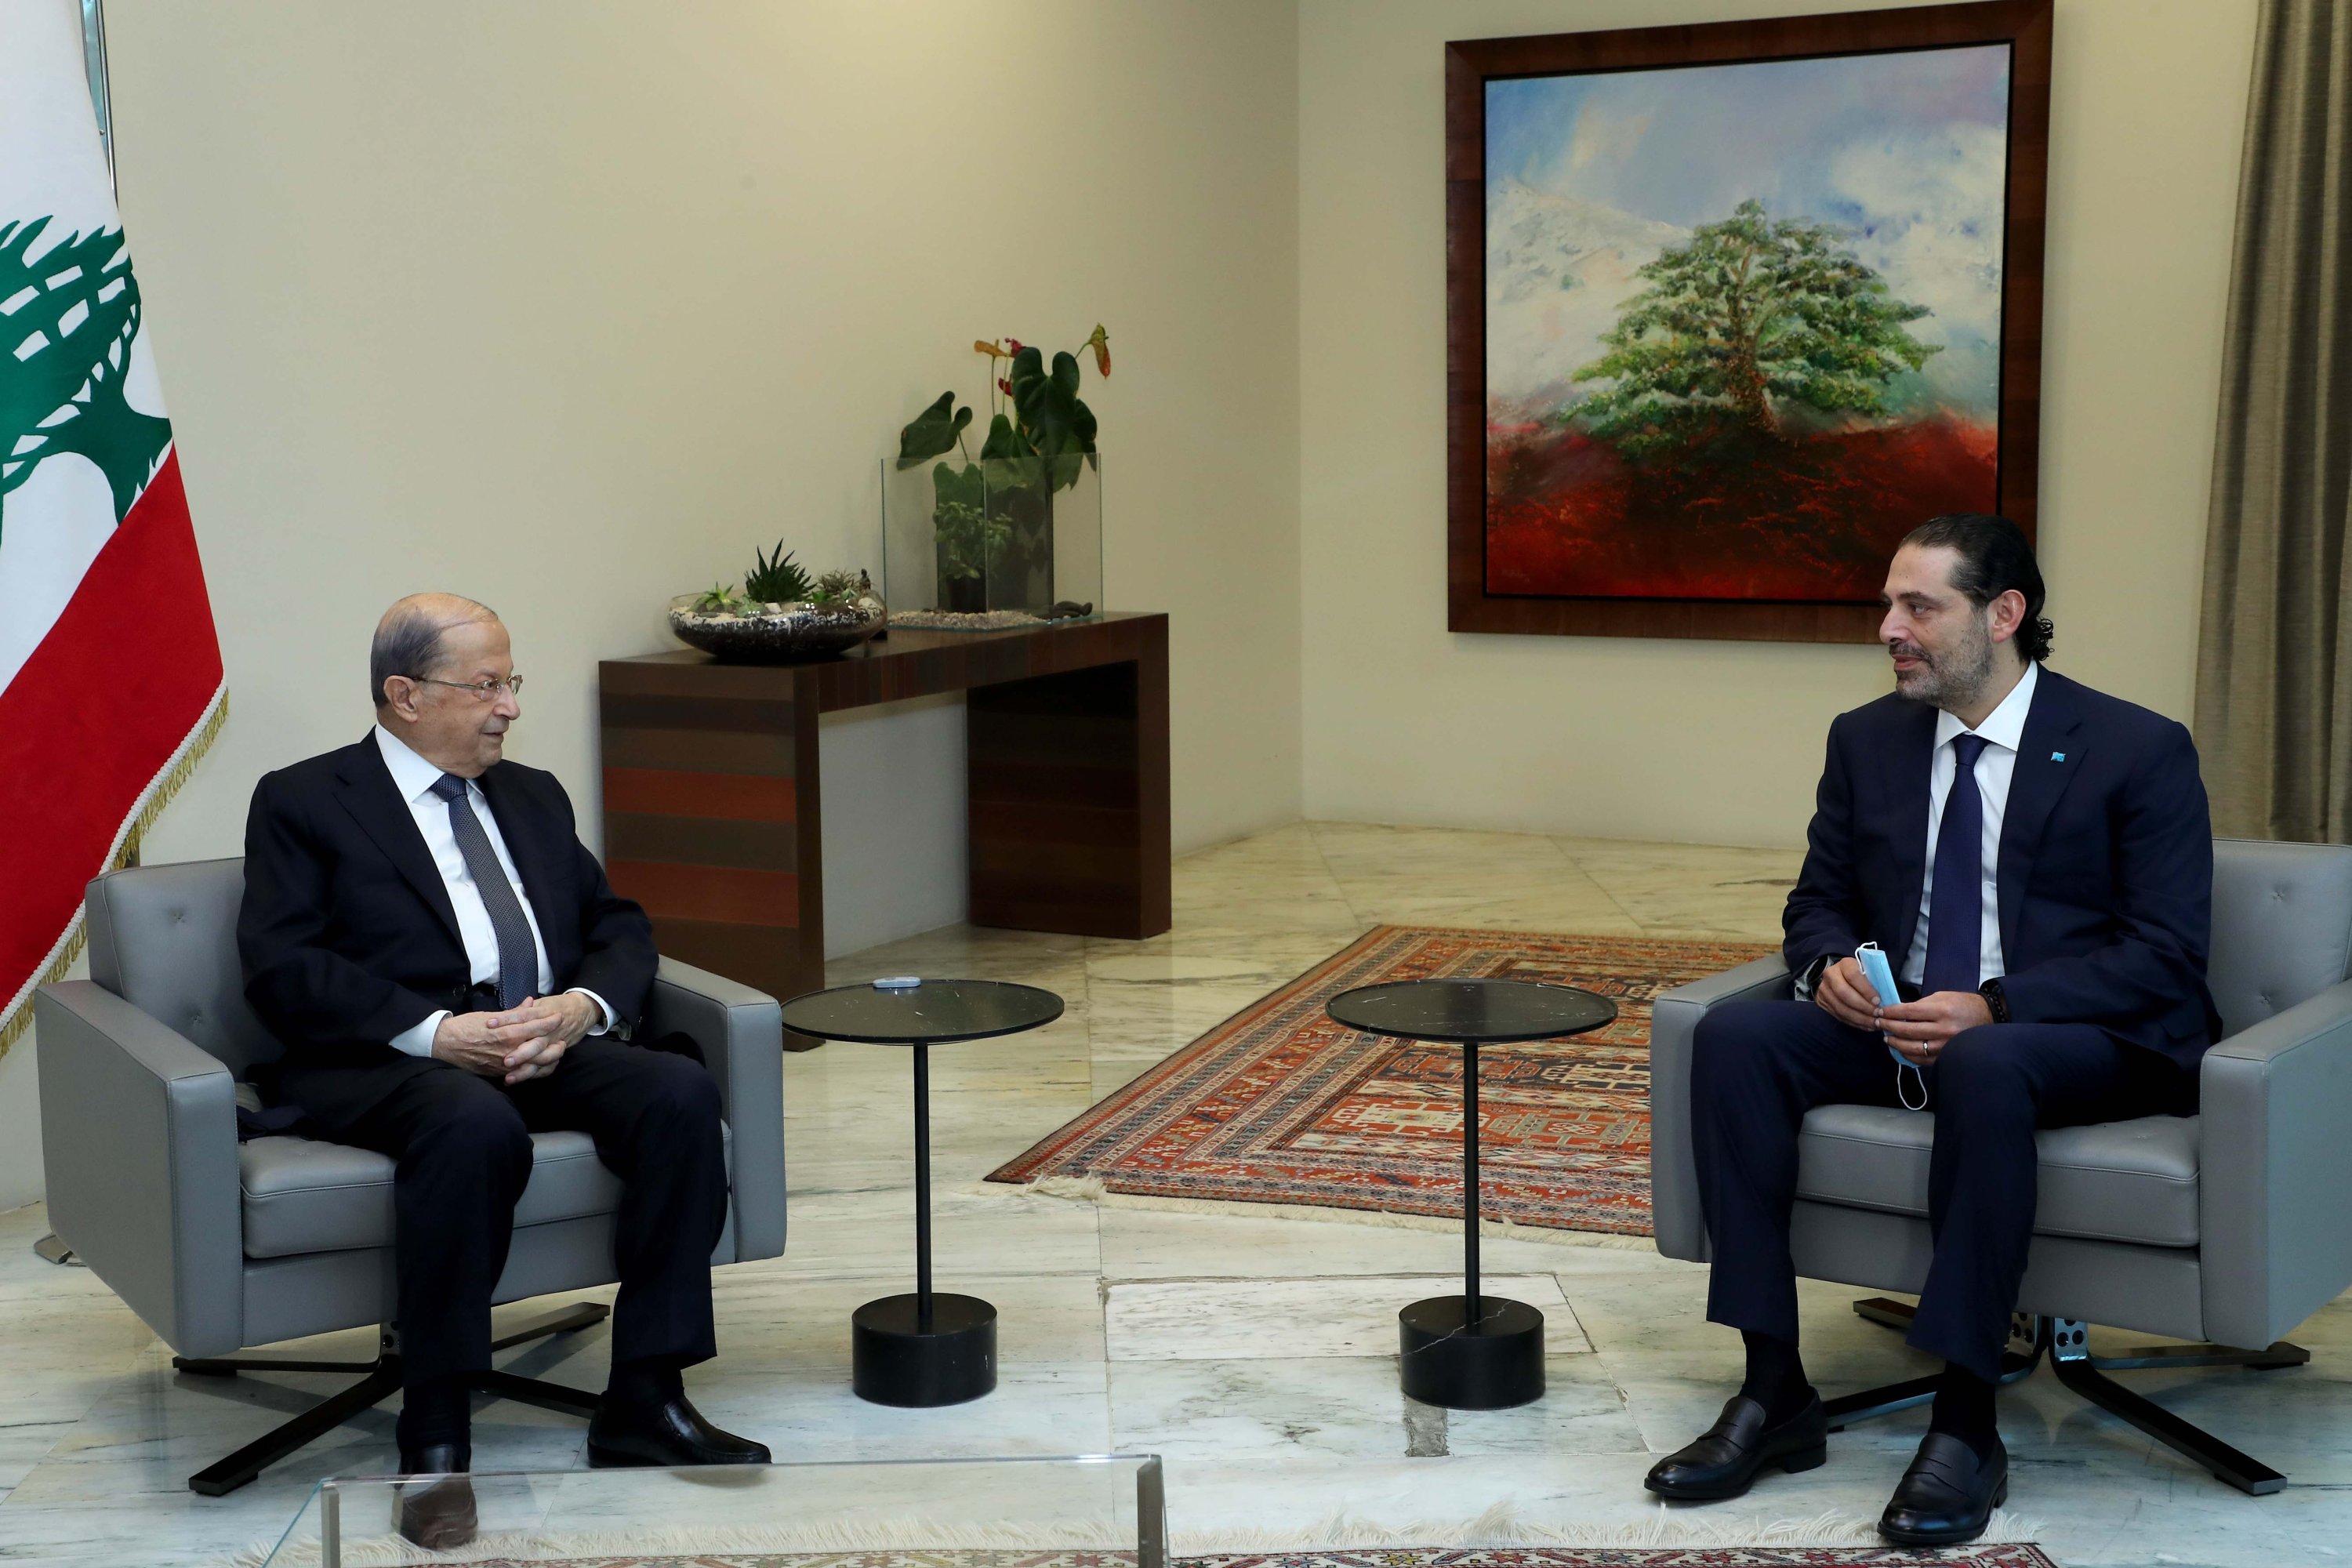 Lebanon's President Michel Aoun and former prime minister Saad Hariri meet at the presidential palace, Baabda, Oct. 22, 2020. (AA Photo)